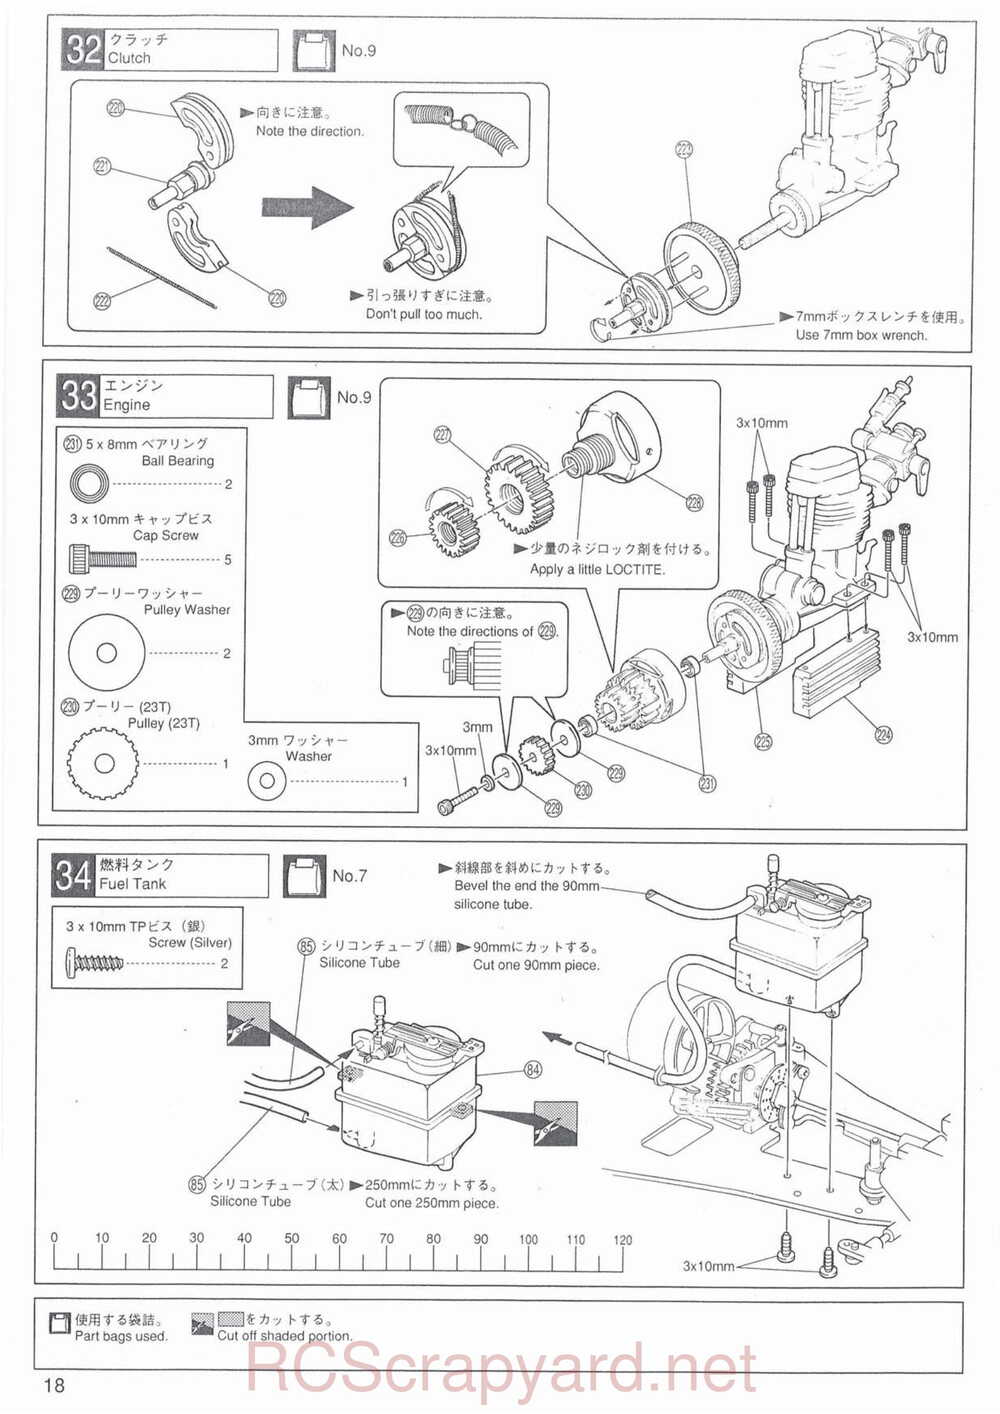 Kyosho - 31701 - Superten-Four FW-03 - Manual - Page 18